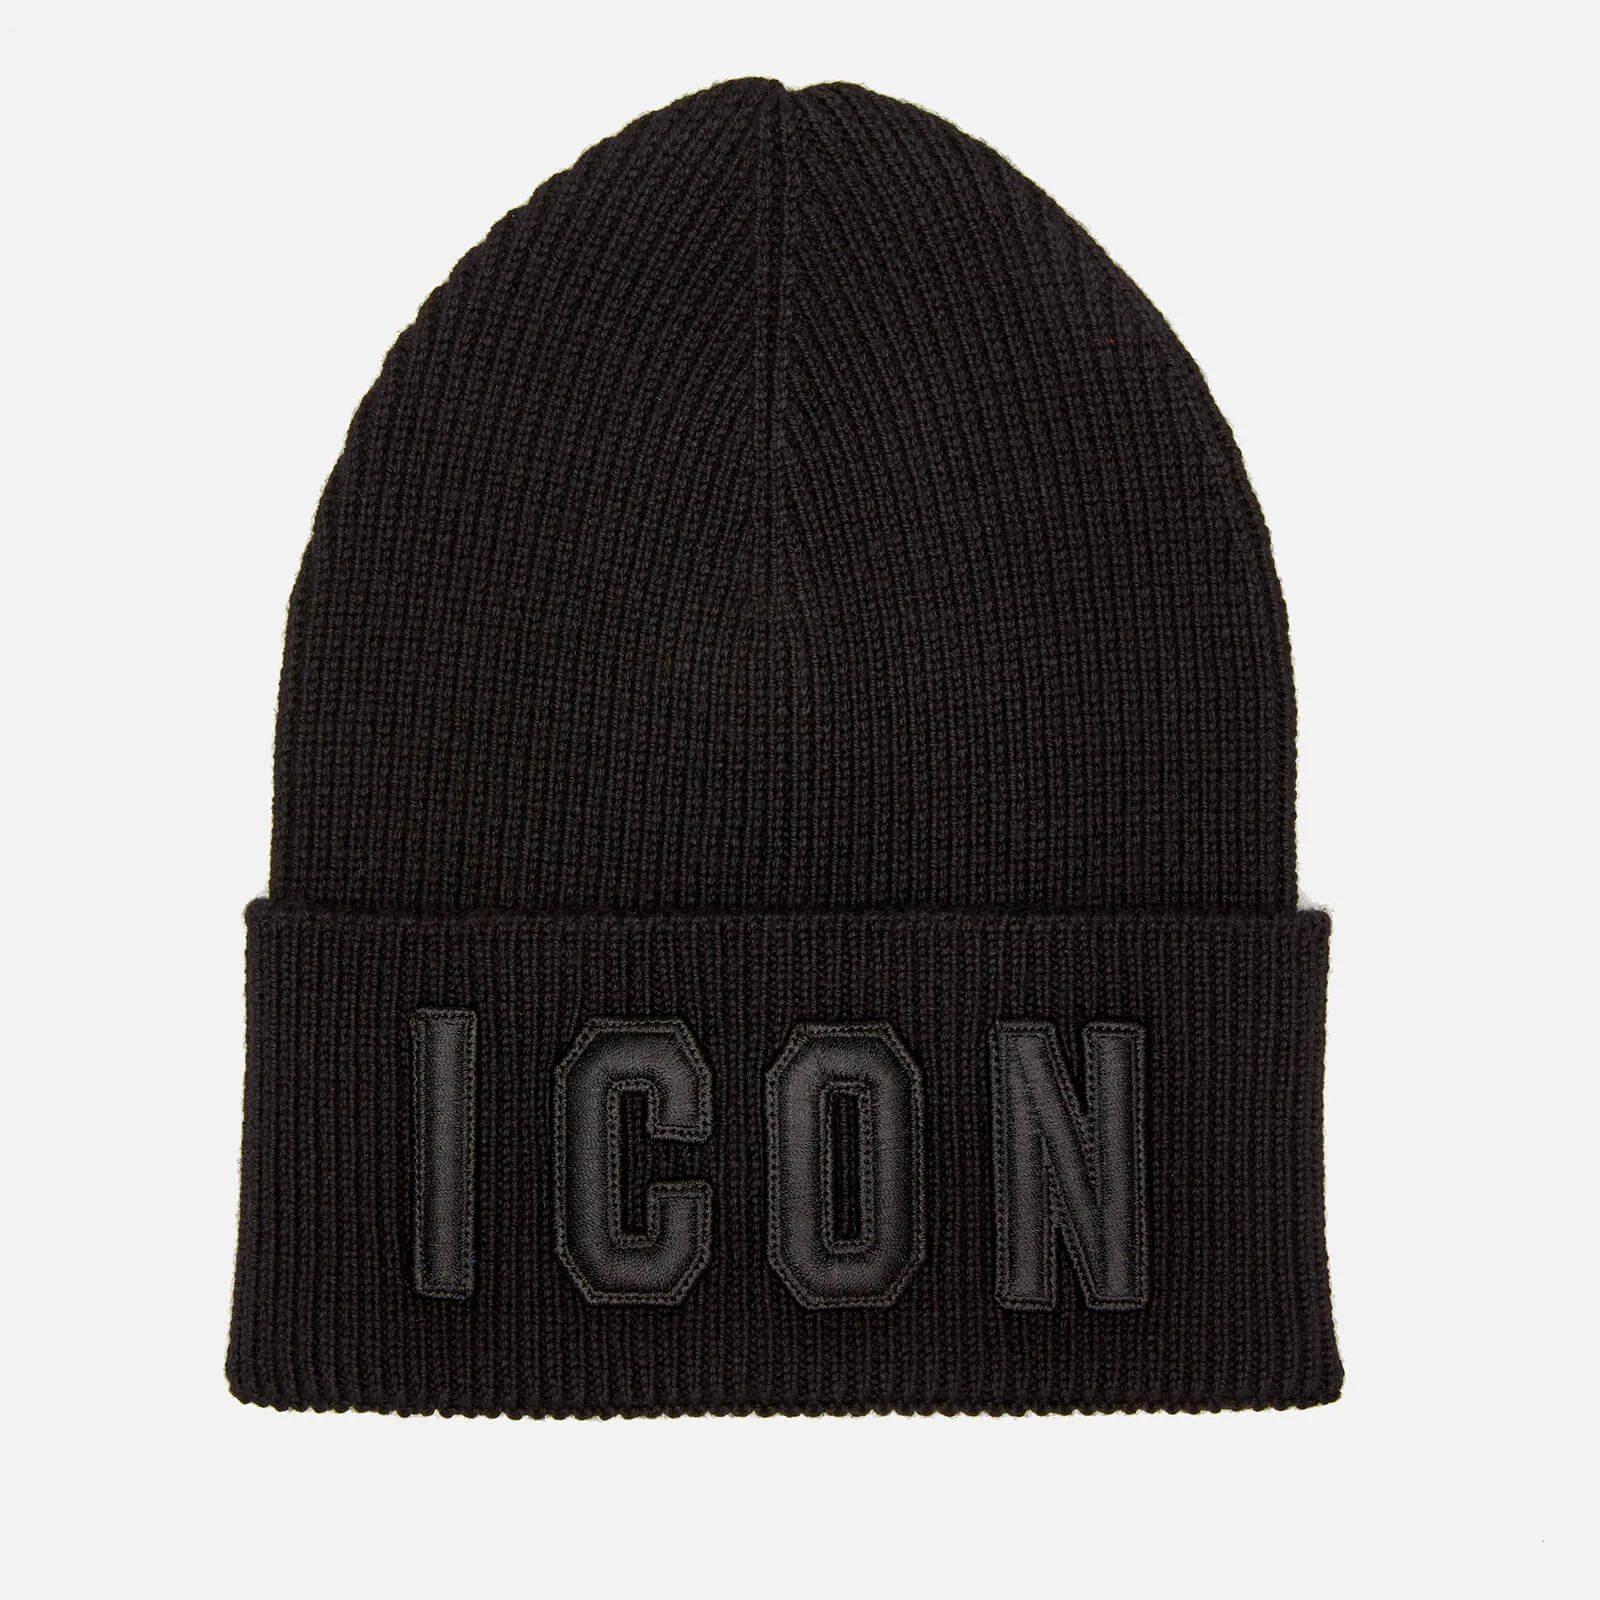 Dsquared2 Men's Icon Knit Hat - Black/Black Image 1